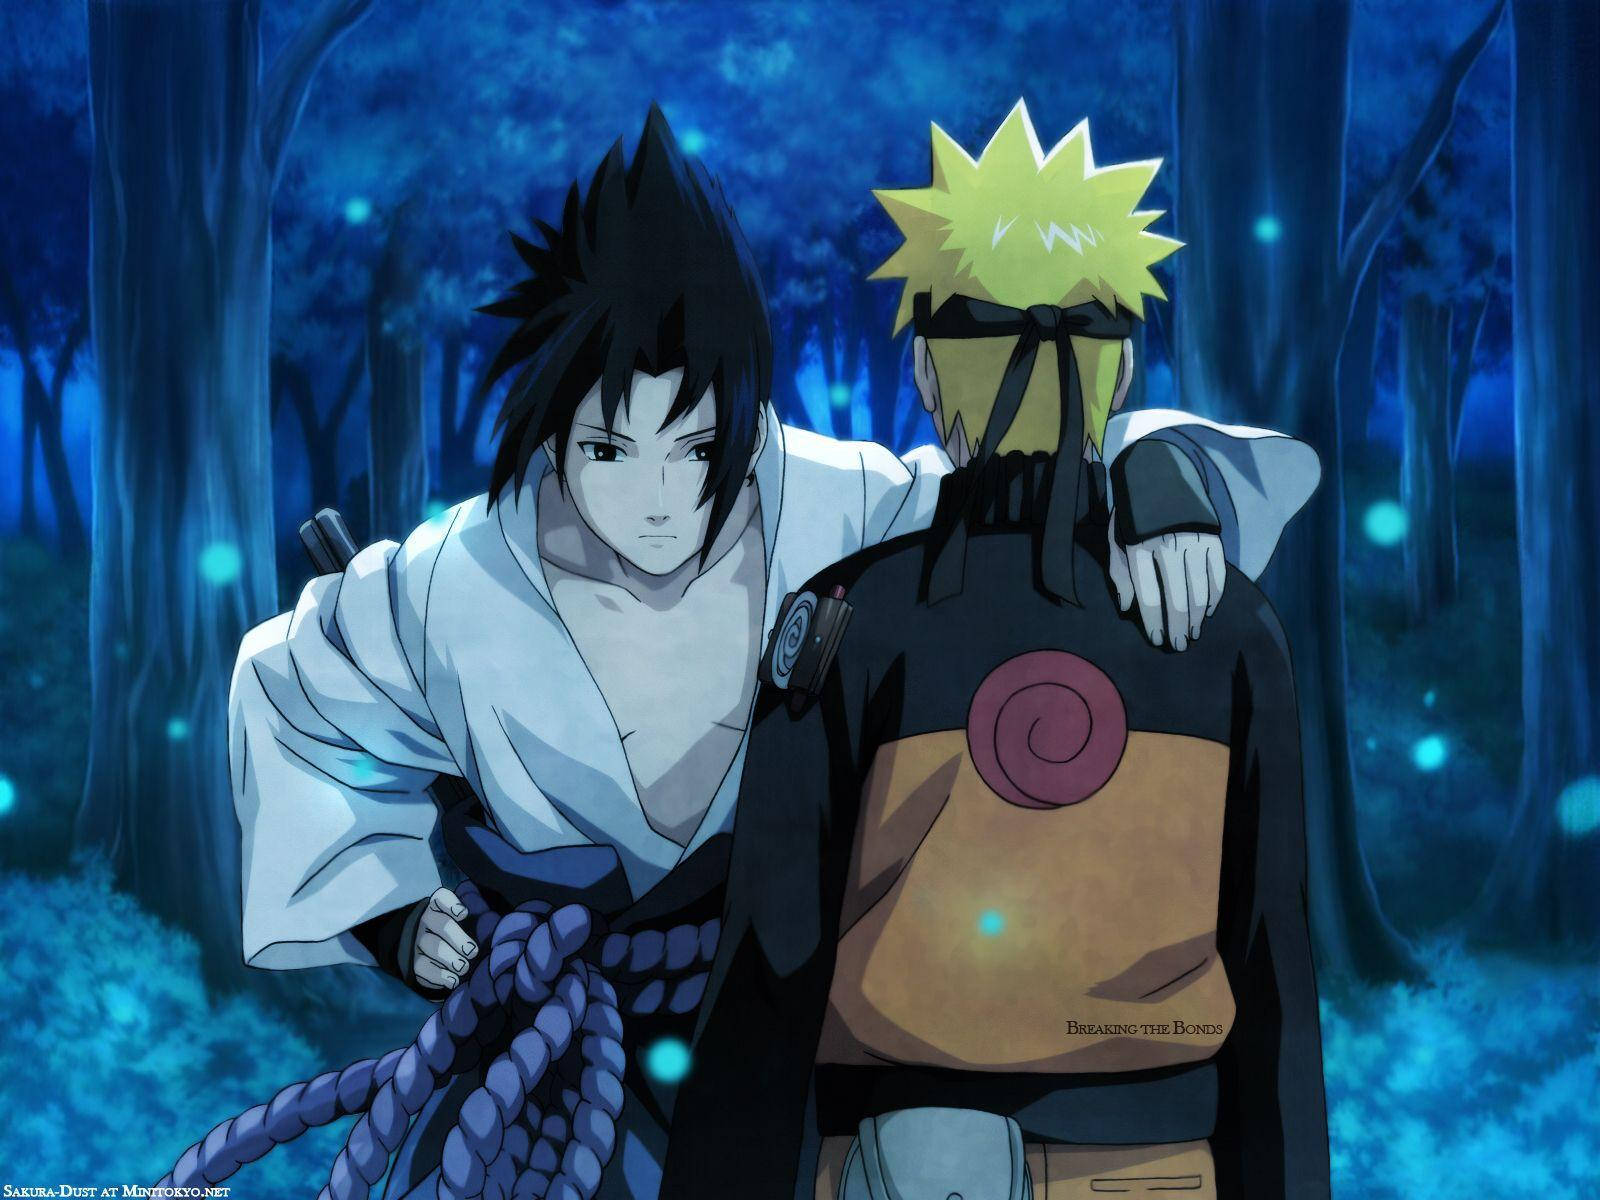 Sasuke Vs Naruto In A Forest Wallpaper